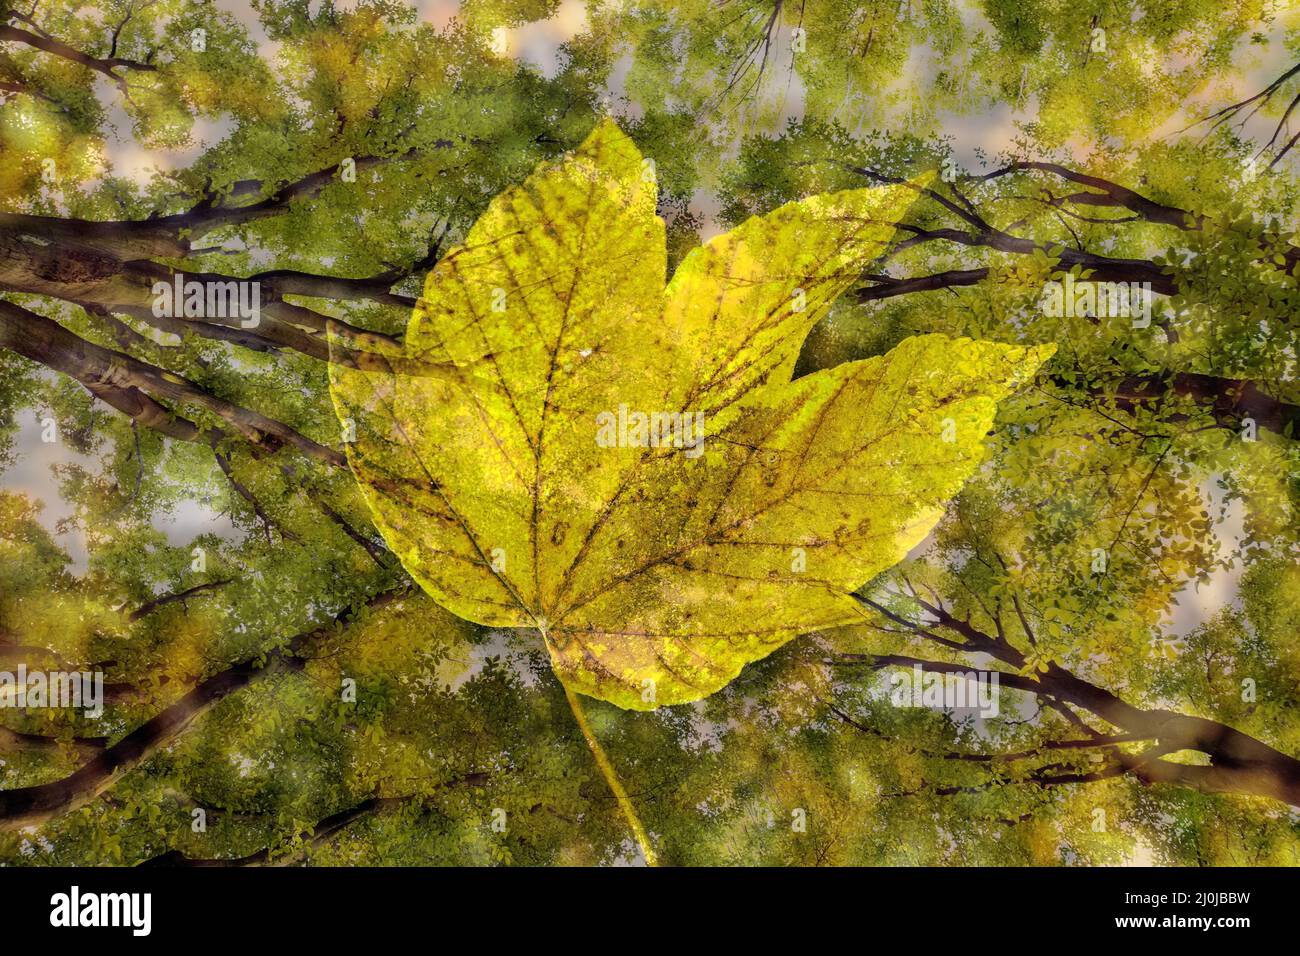 Nature fantasy photo with an autumn leaf and columnar hornbeam (Carpinus betulus), Germany Stock Photo